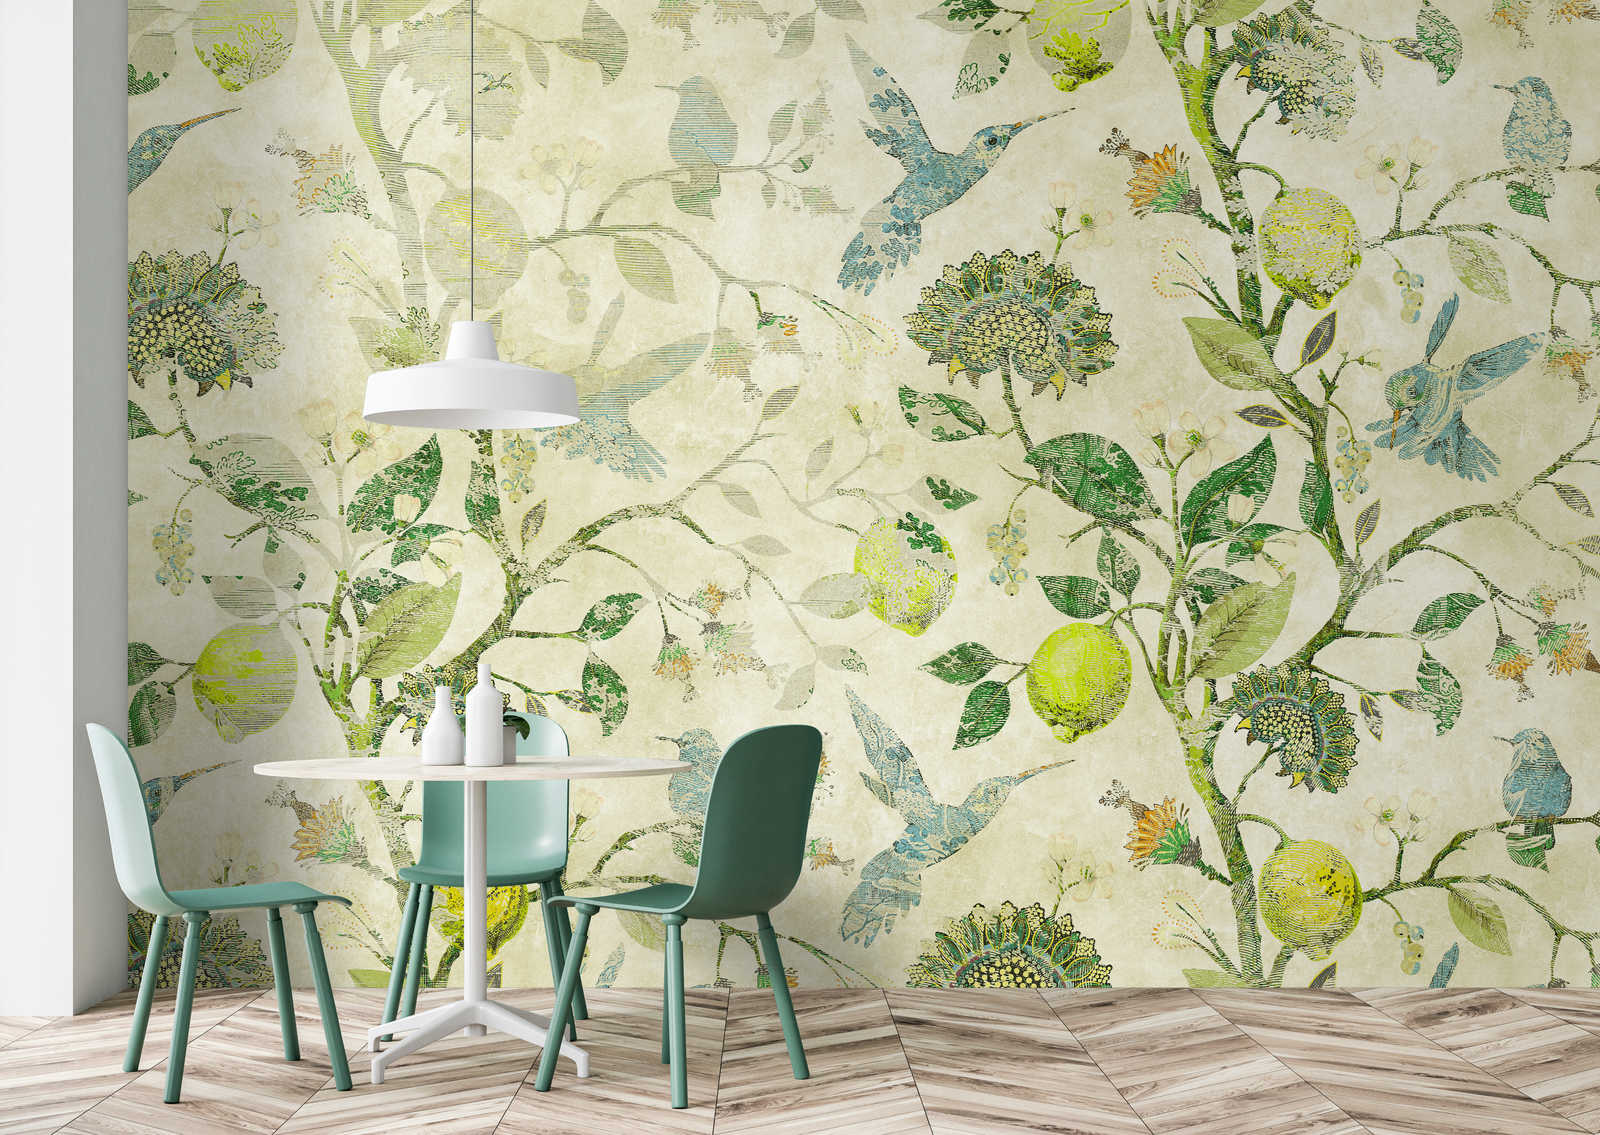             In the Lemon Tree 3 - vintage style green lemon branches photo wallpaper
        